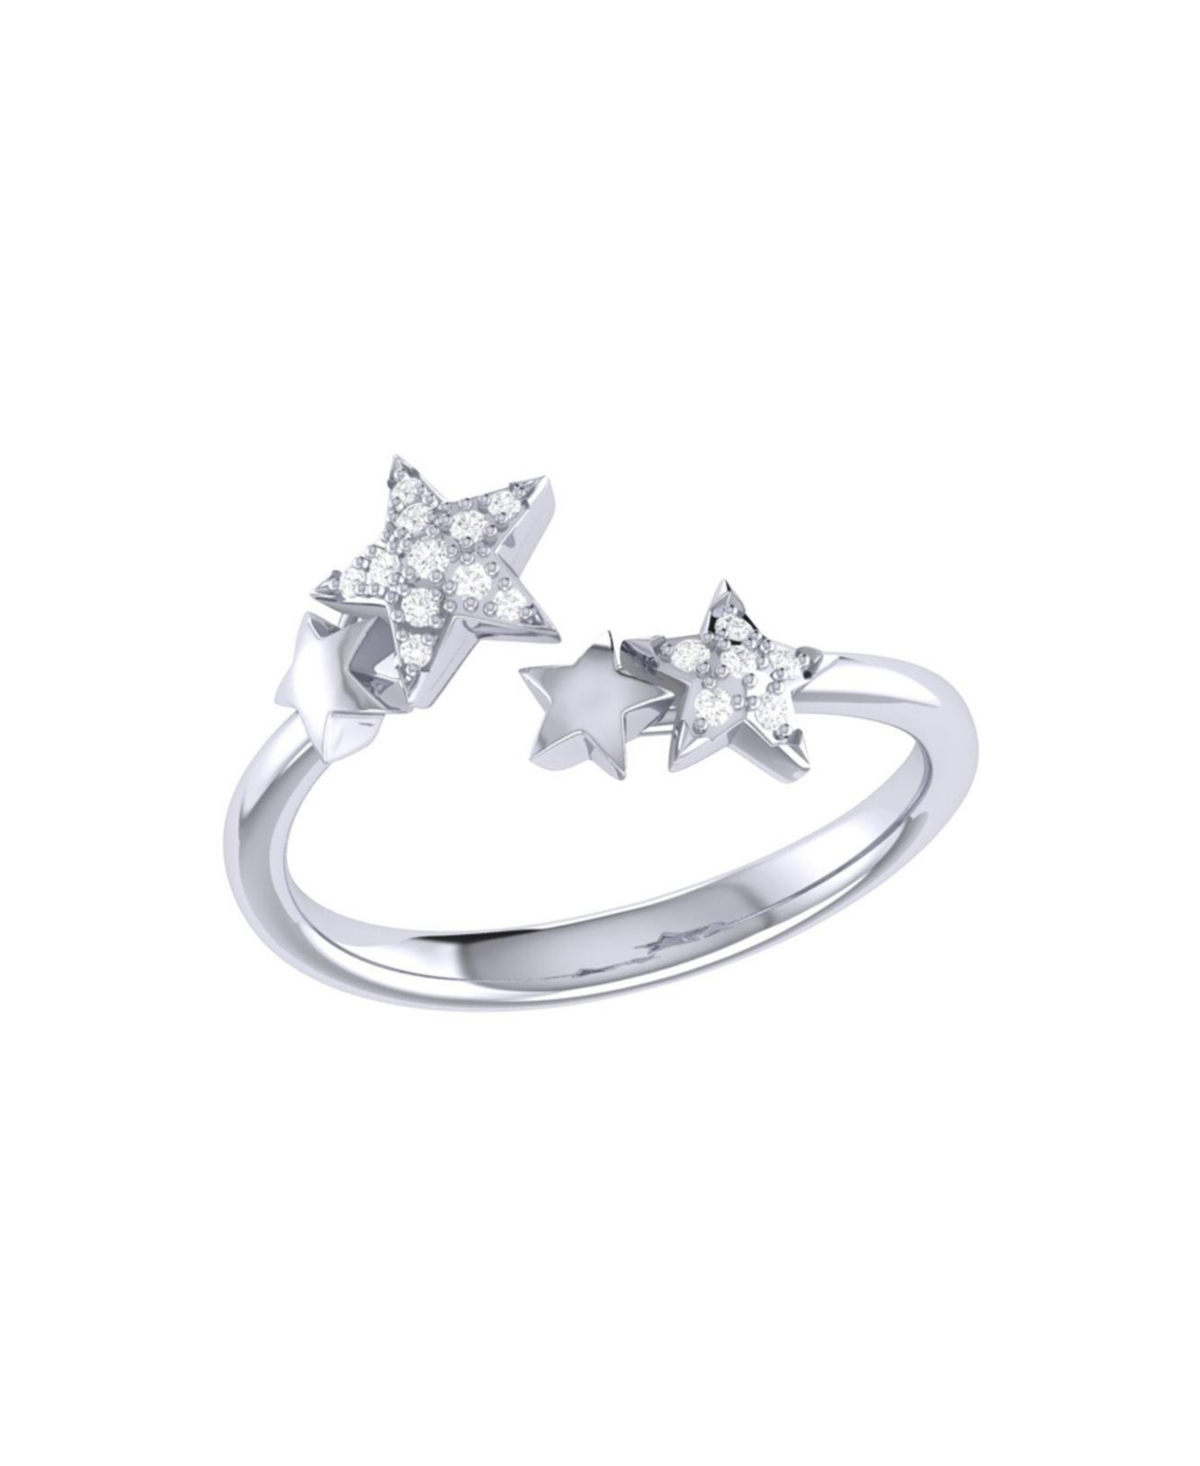 LUVMYJEWELRY DAZZLING STAR COUPLES DESIGN STERLING SILVER DIAMOND OPEN WOMEN RING